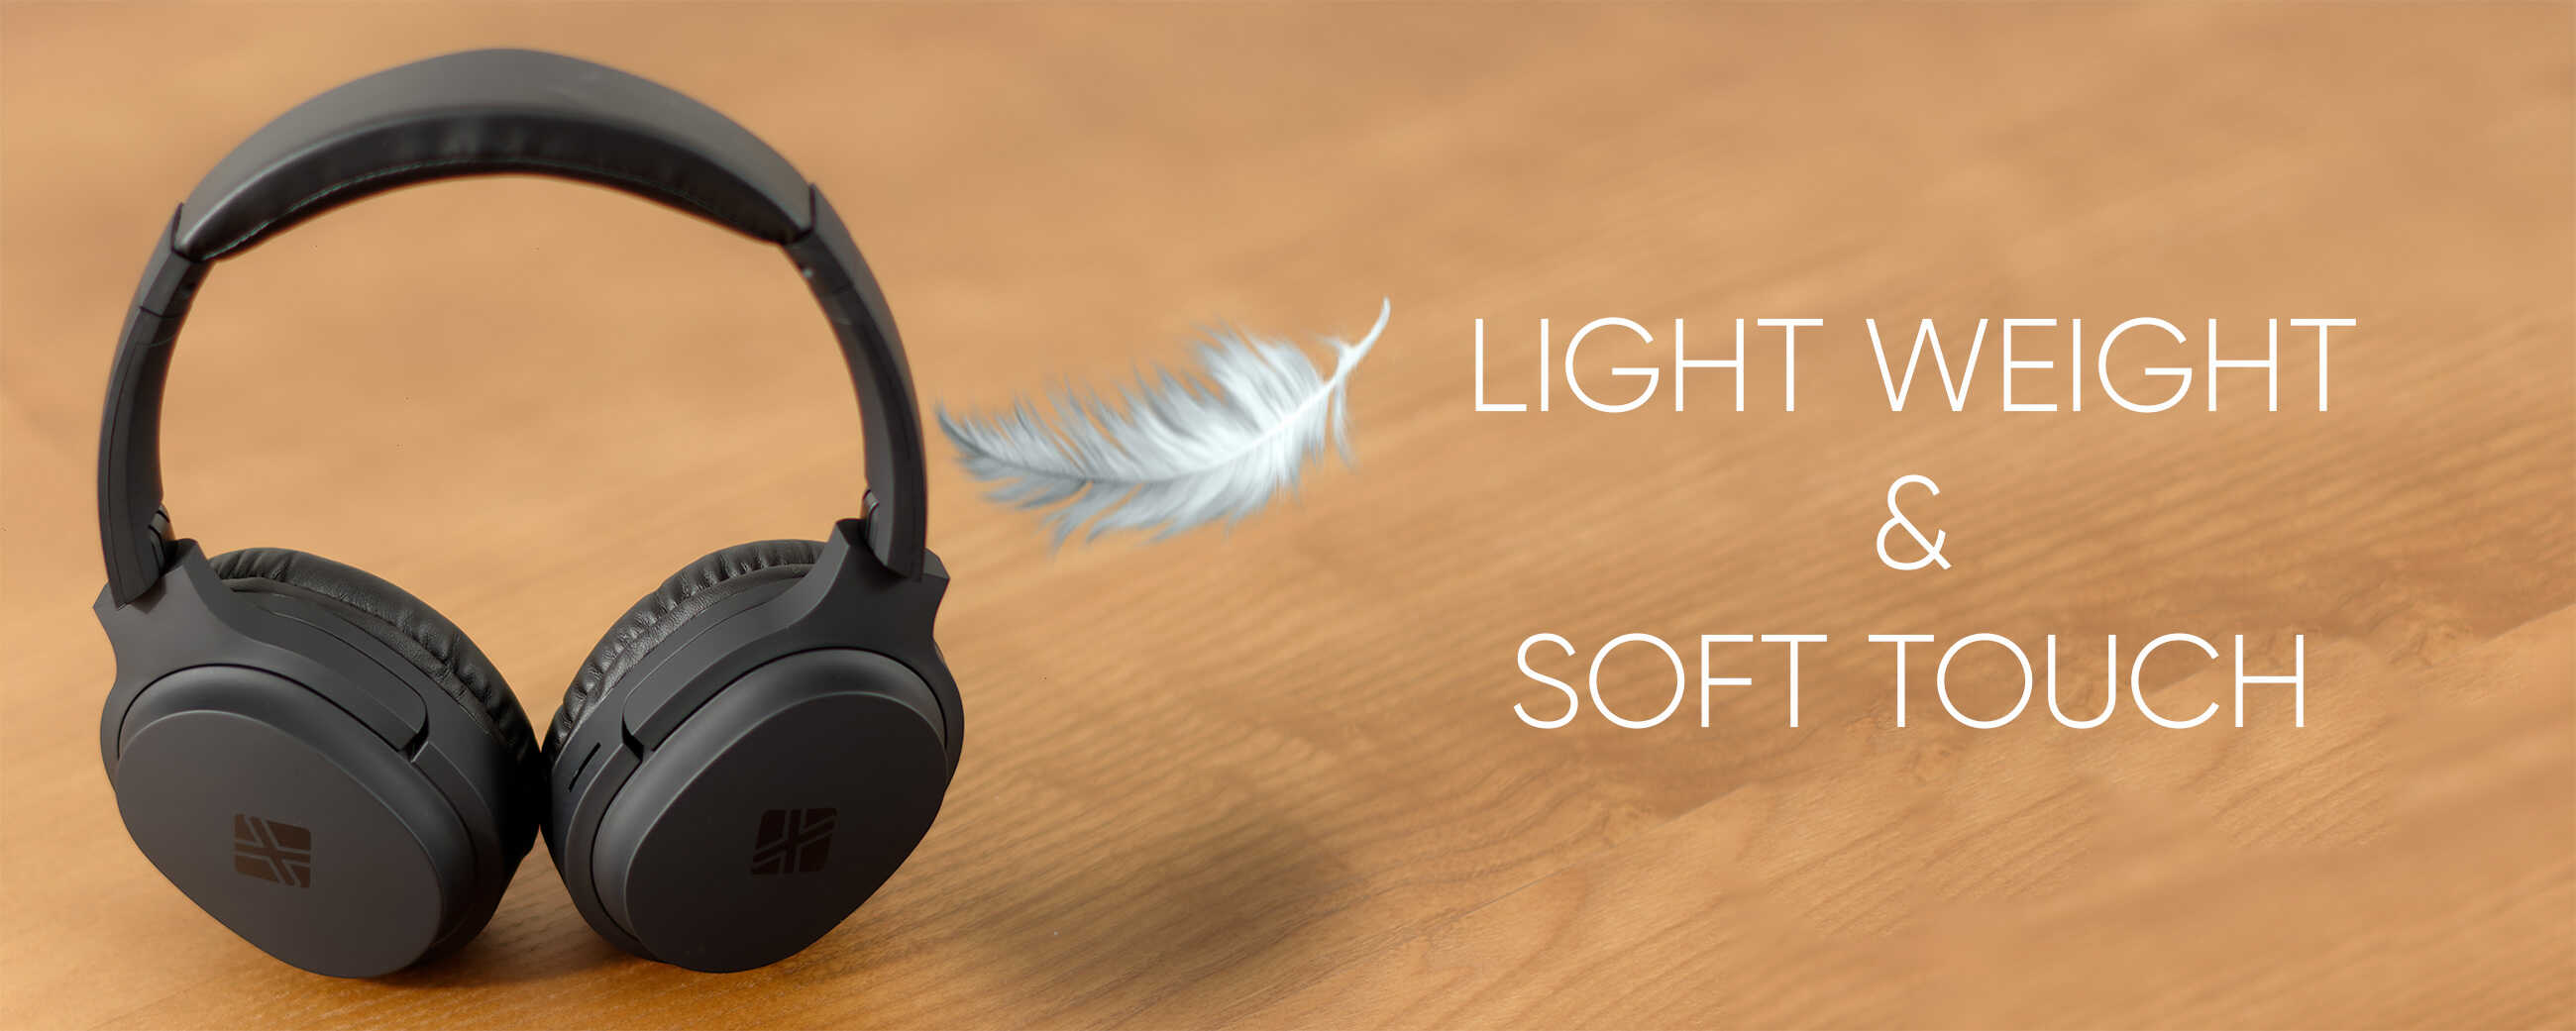 NEXT-Audiocom-x4-light-weight-headphones